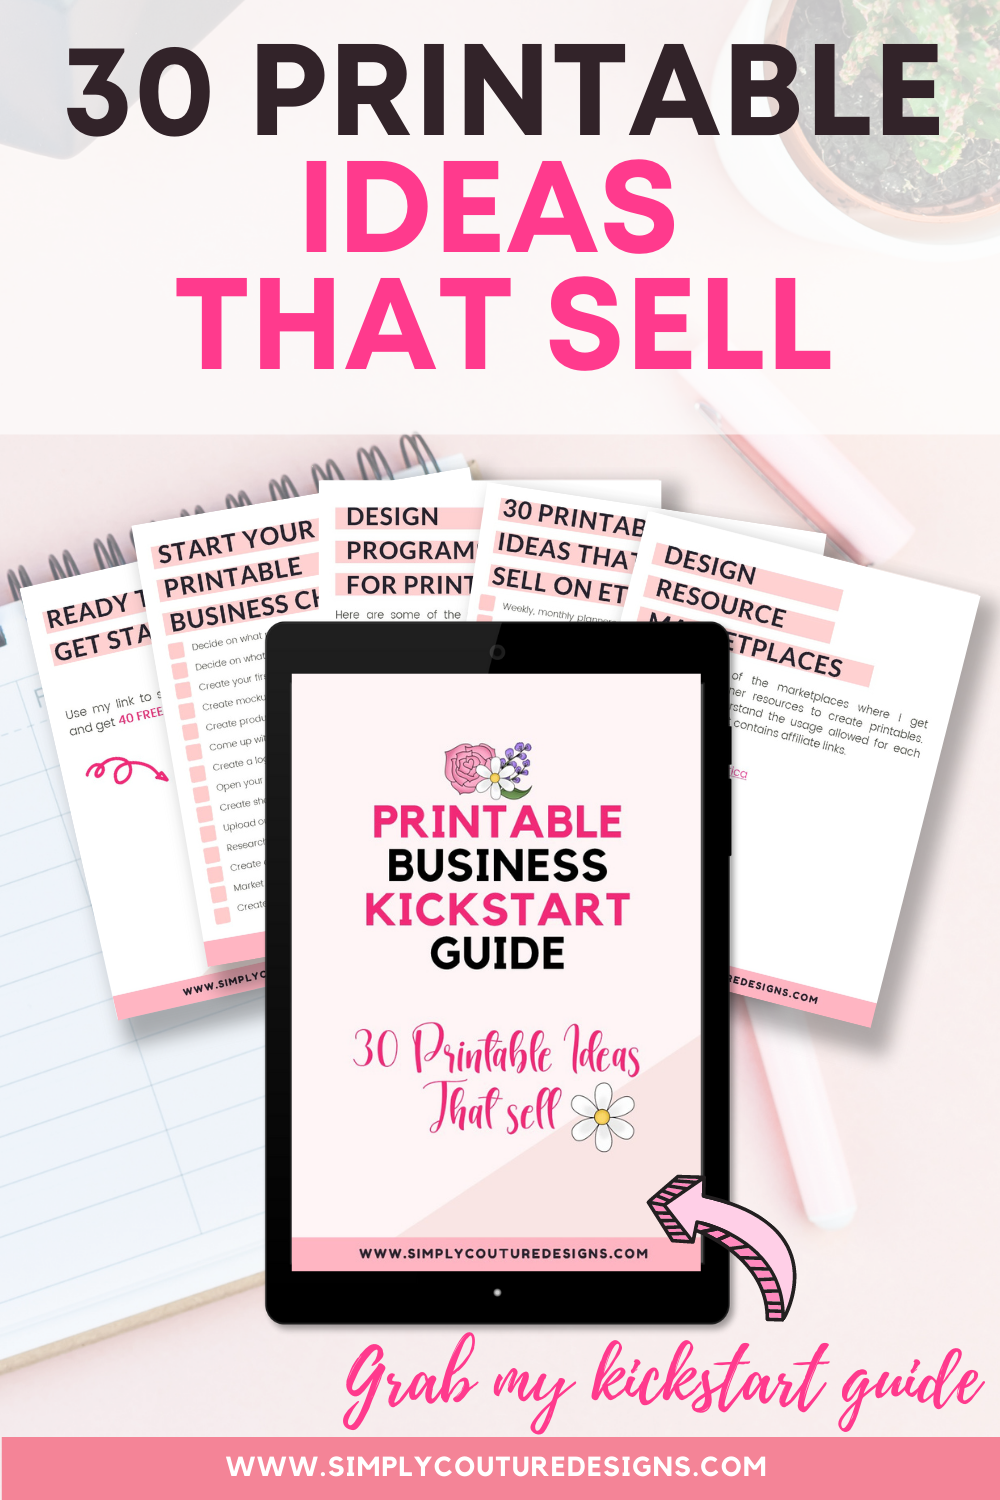 30 printable ideas that sell plus printable business kickstart guide